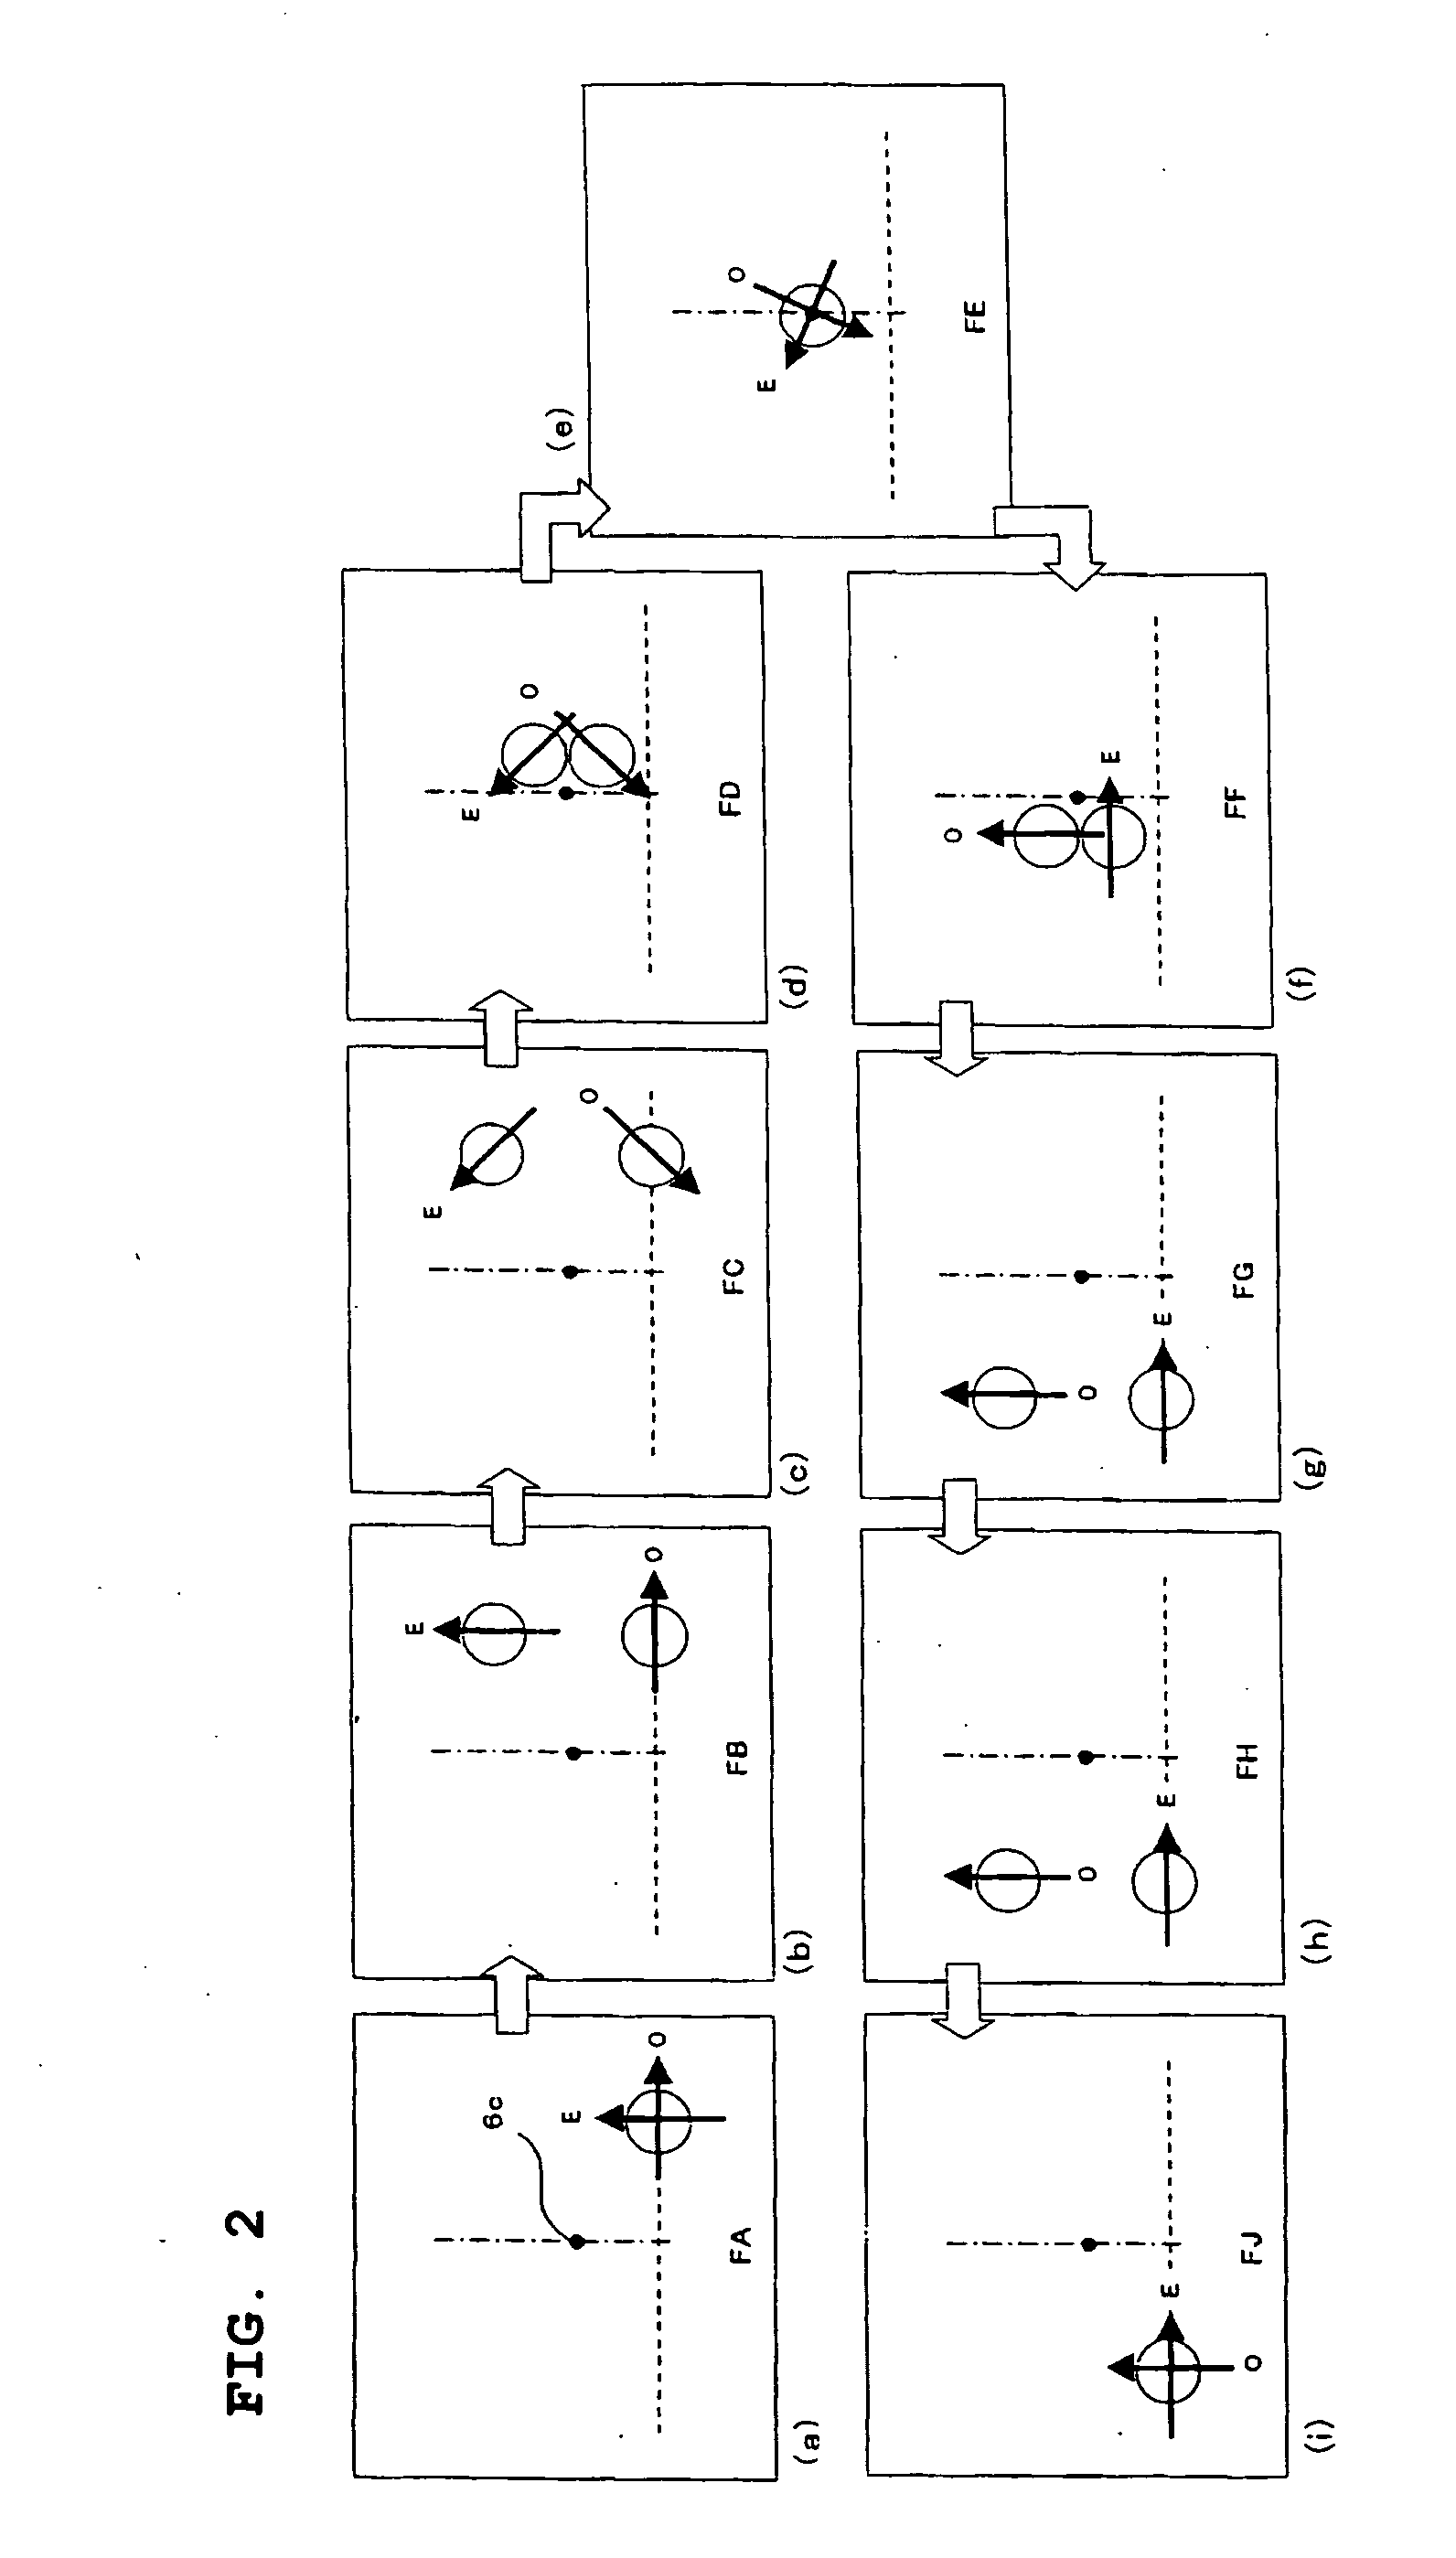 In-line optical isolator